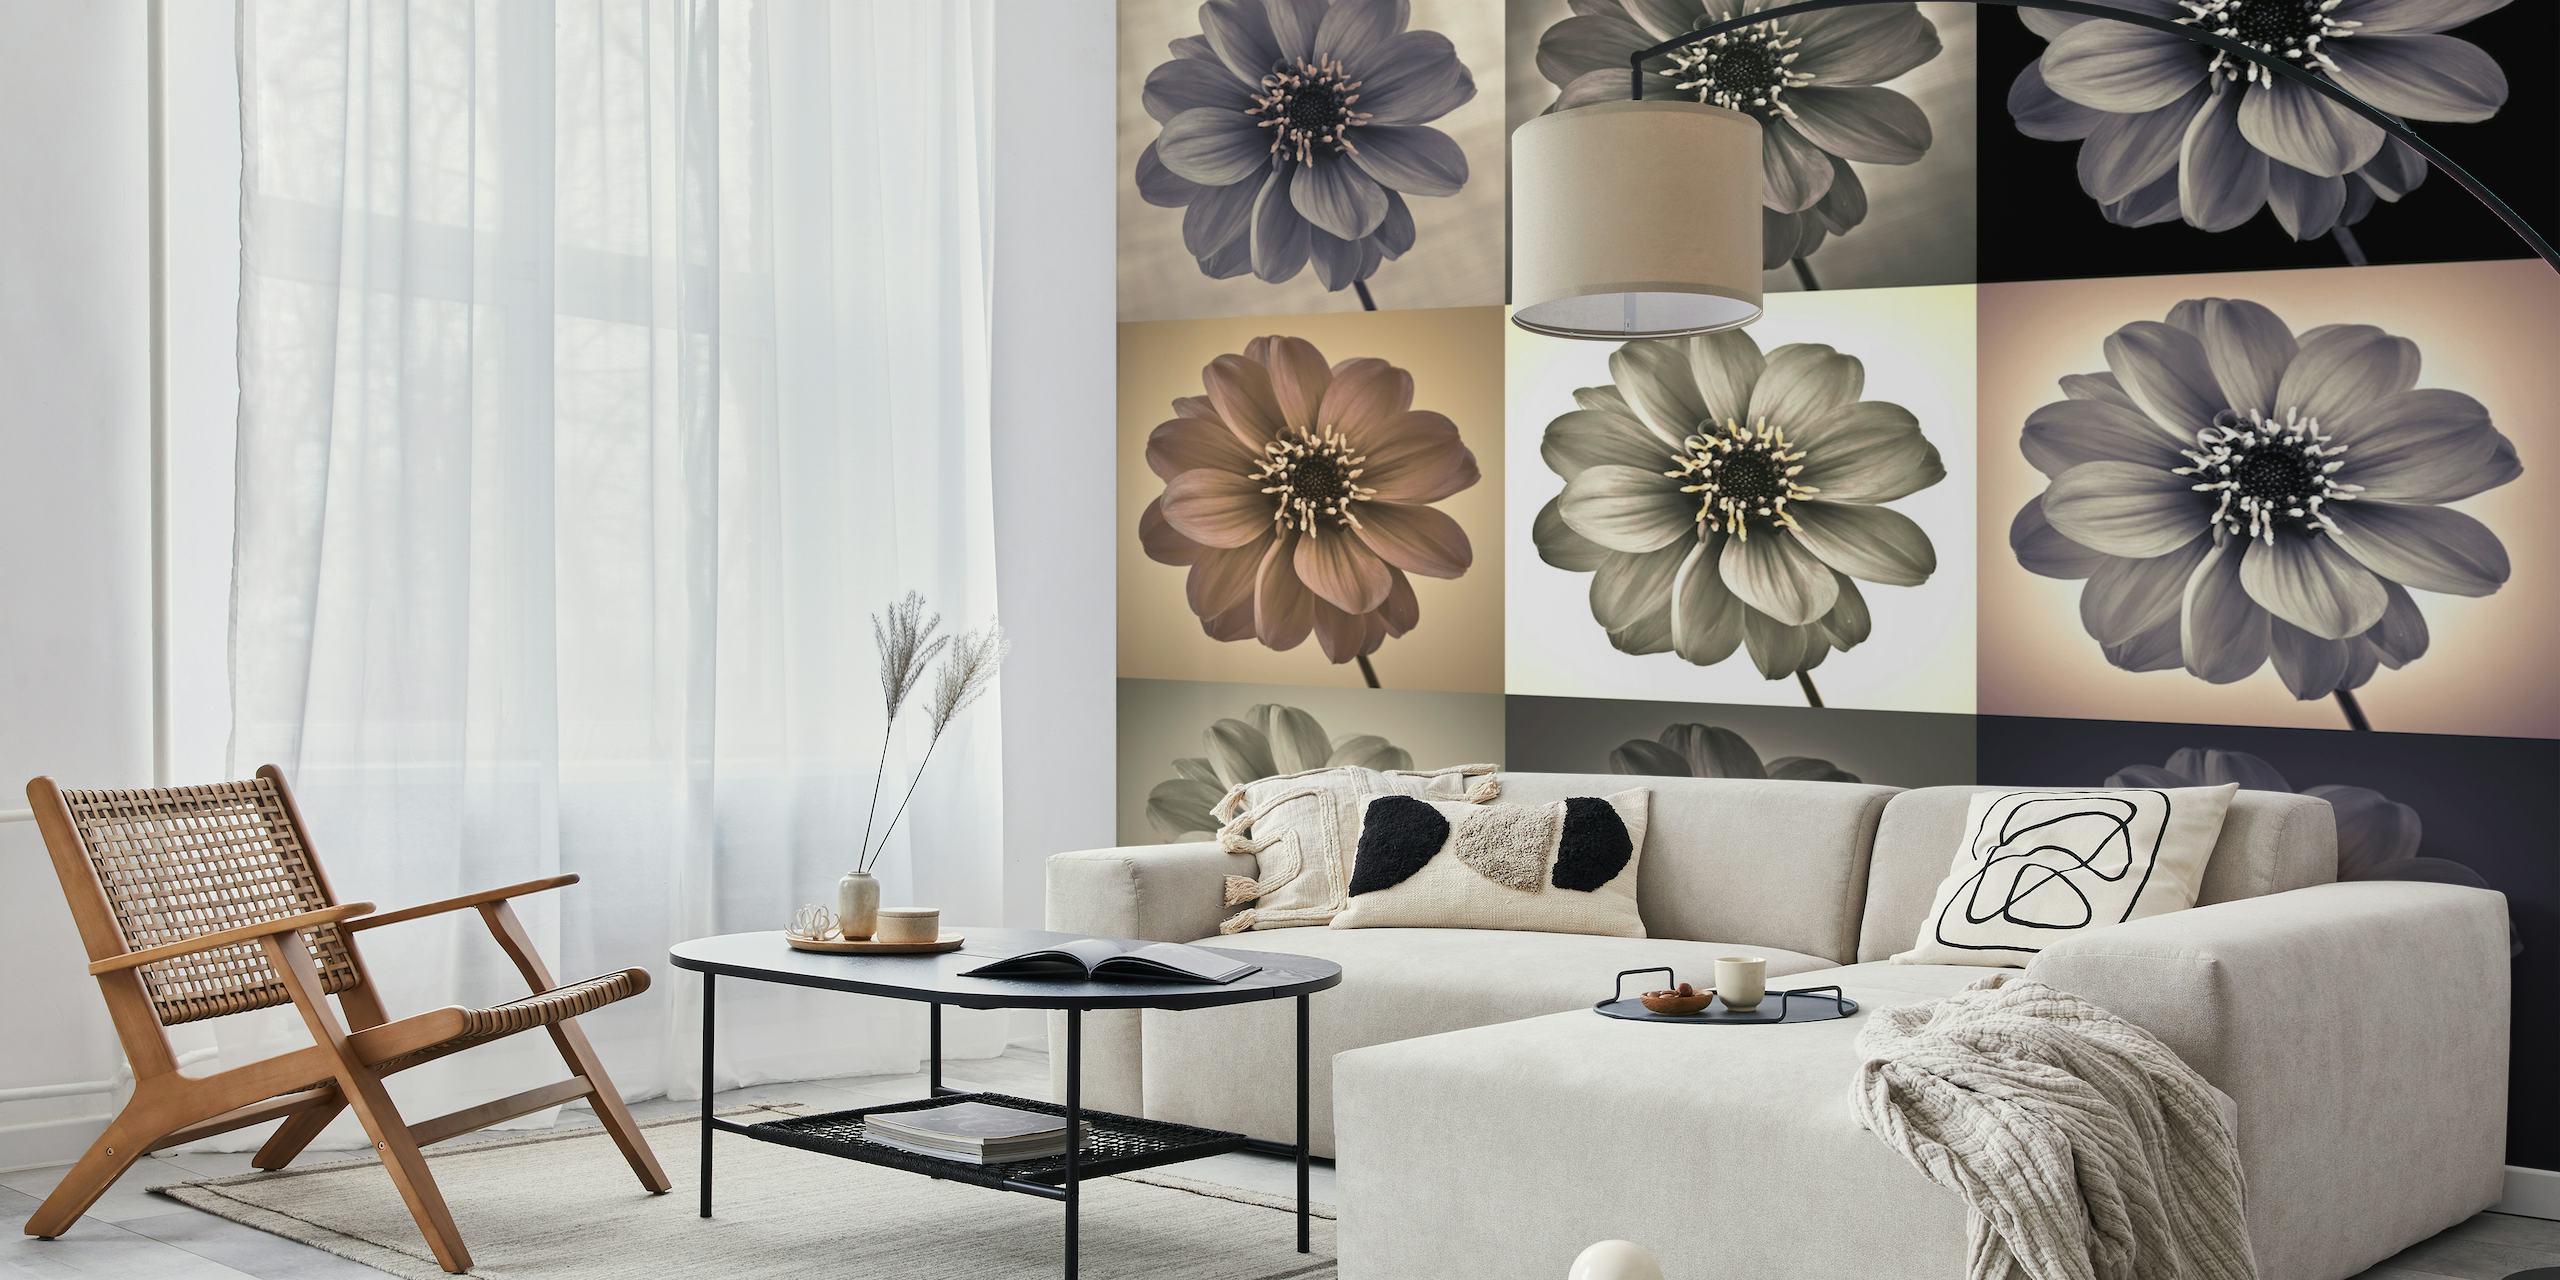 Fotomural vinílico de parede de flor dália de nove painéis em tons sépia e tons de cinza